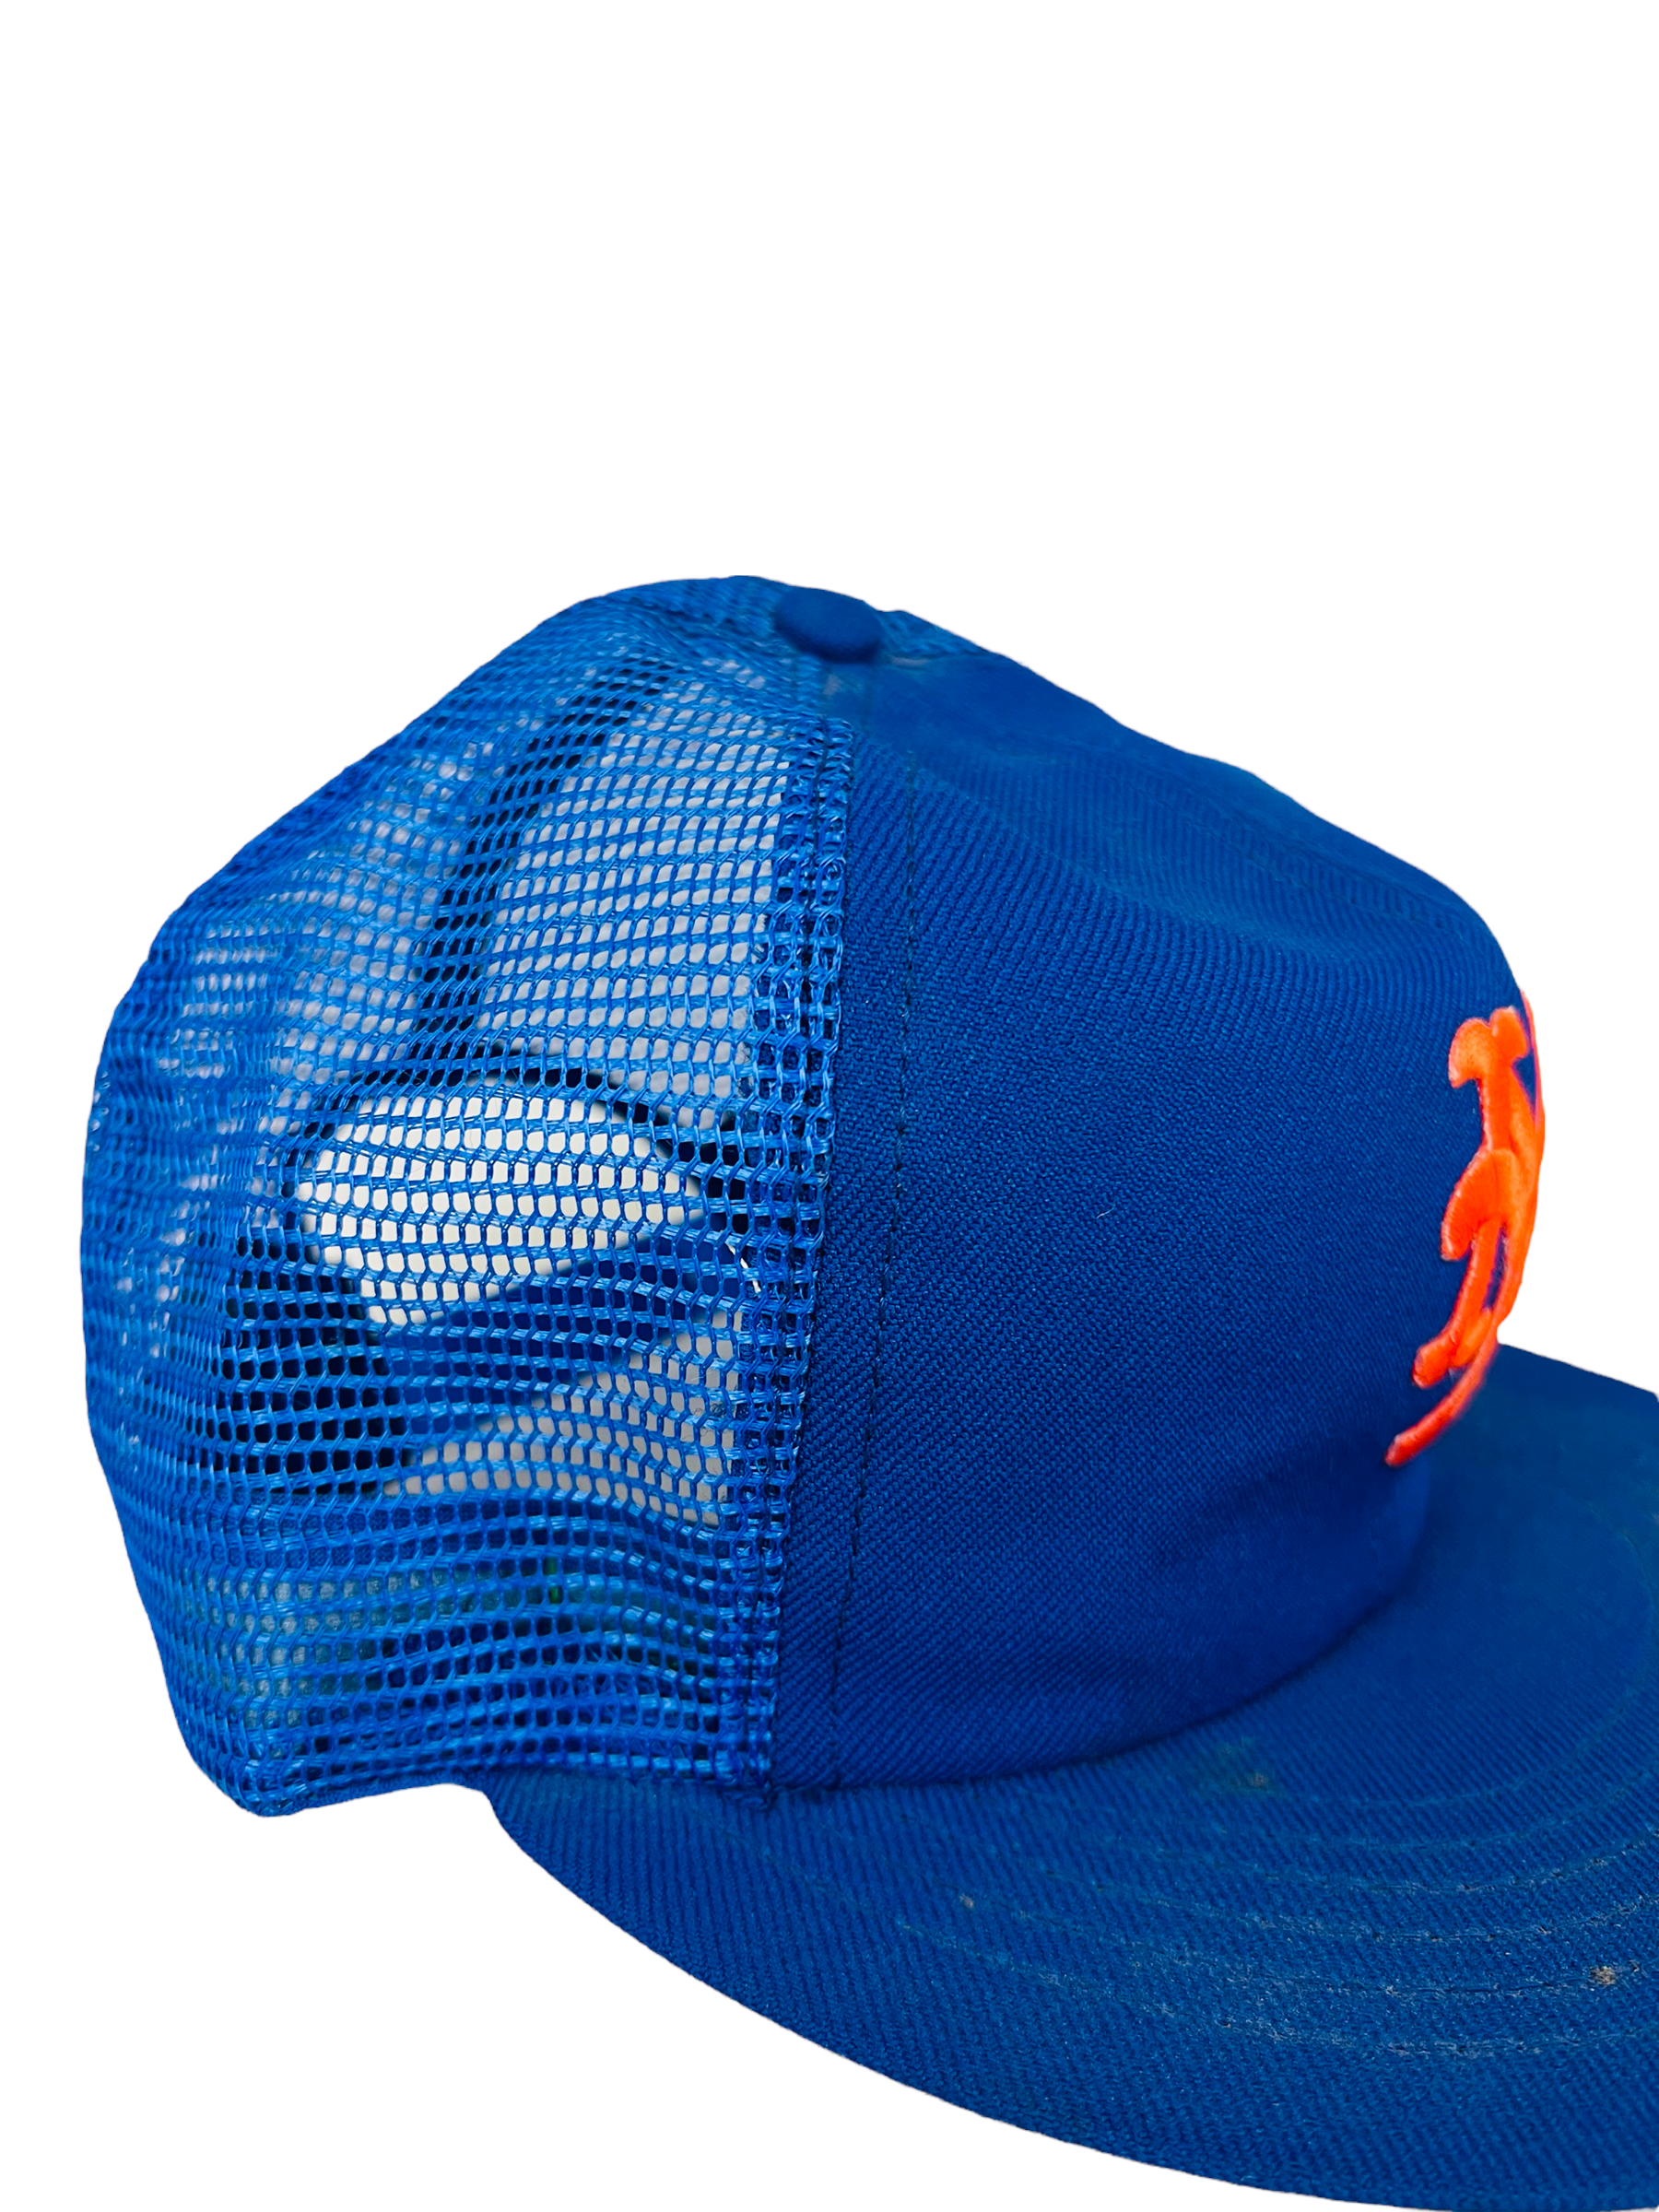 New York Mets Baseball Apparel, Gear, T-Shirts, Hats - MLB